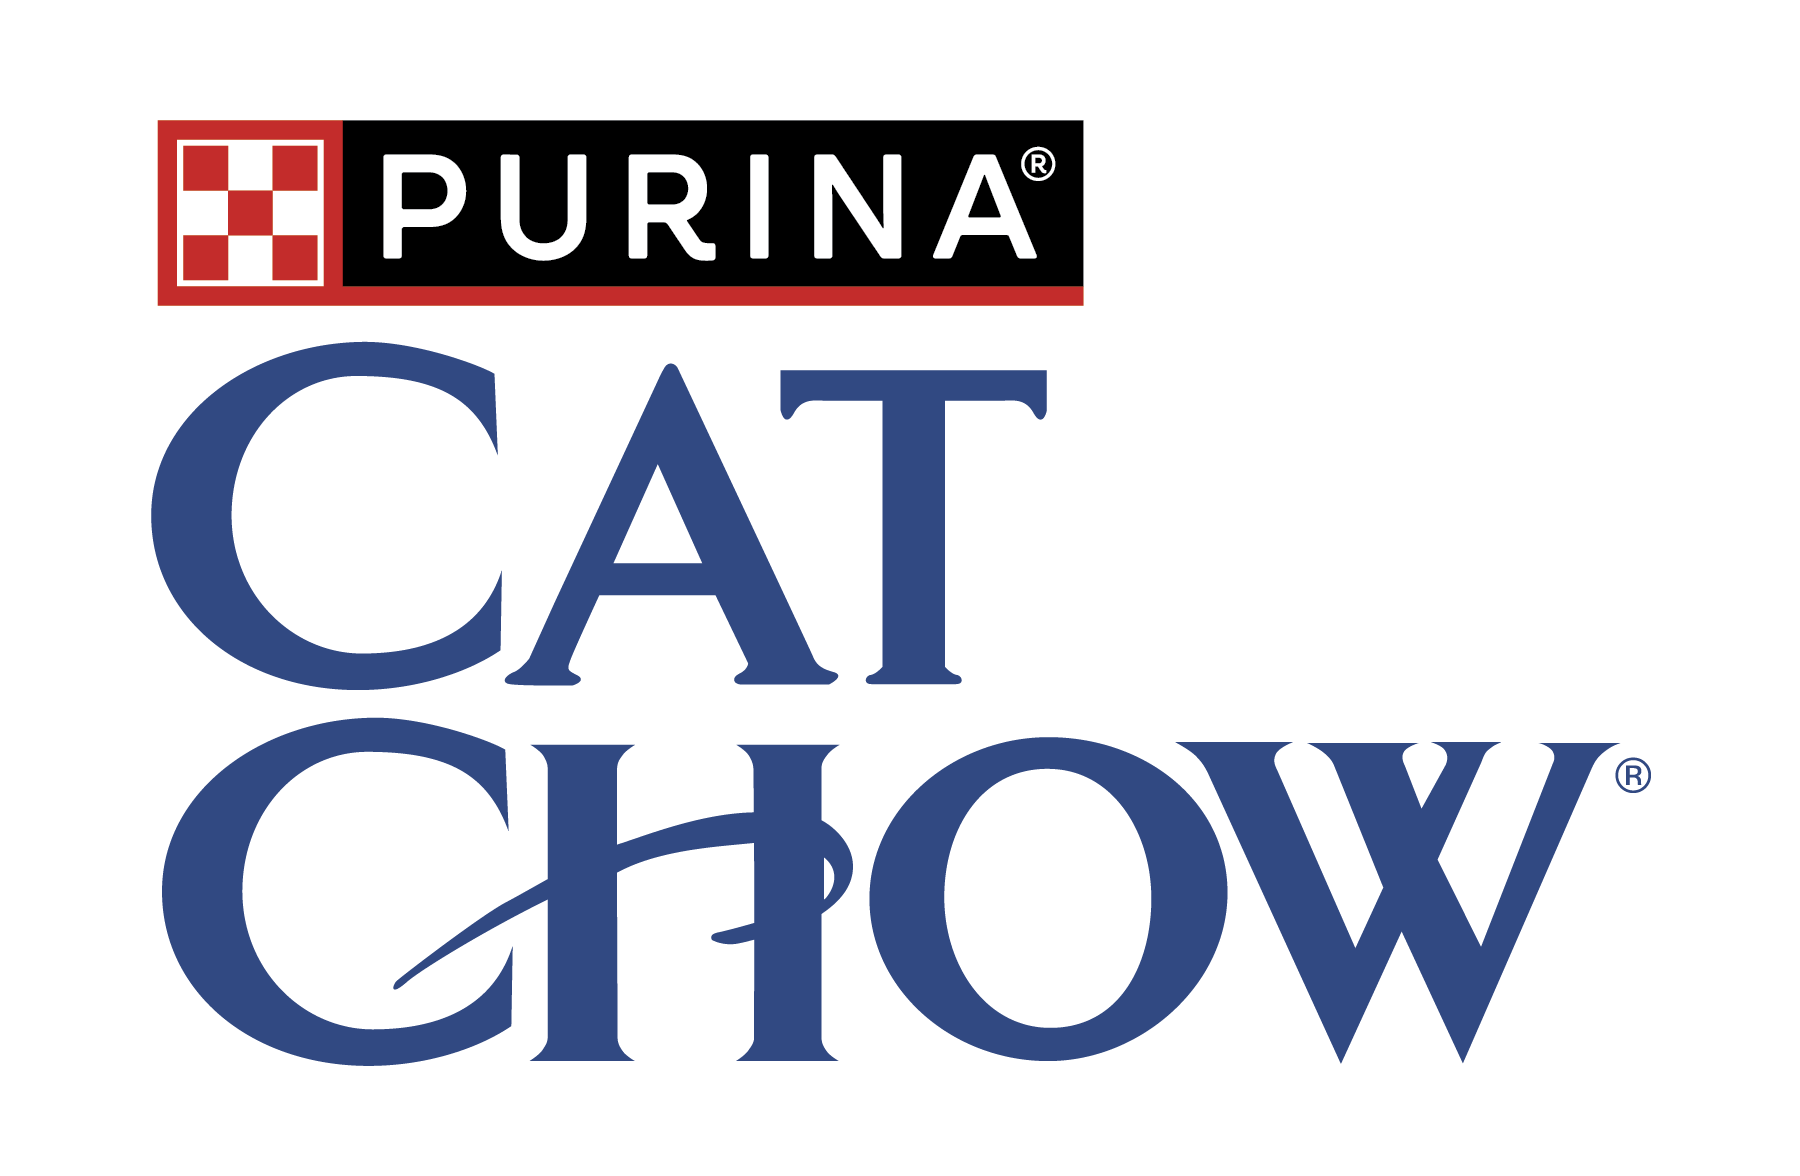 Cat Chow® logo